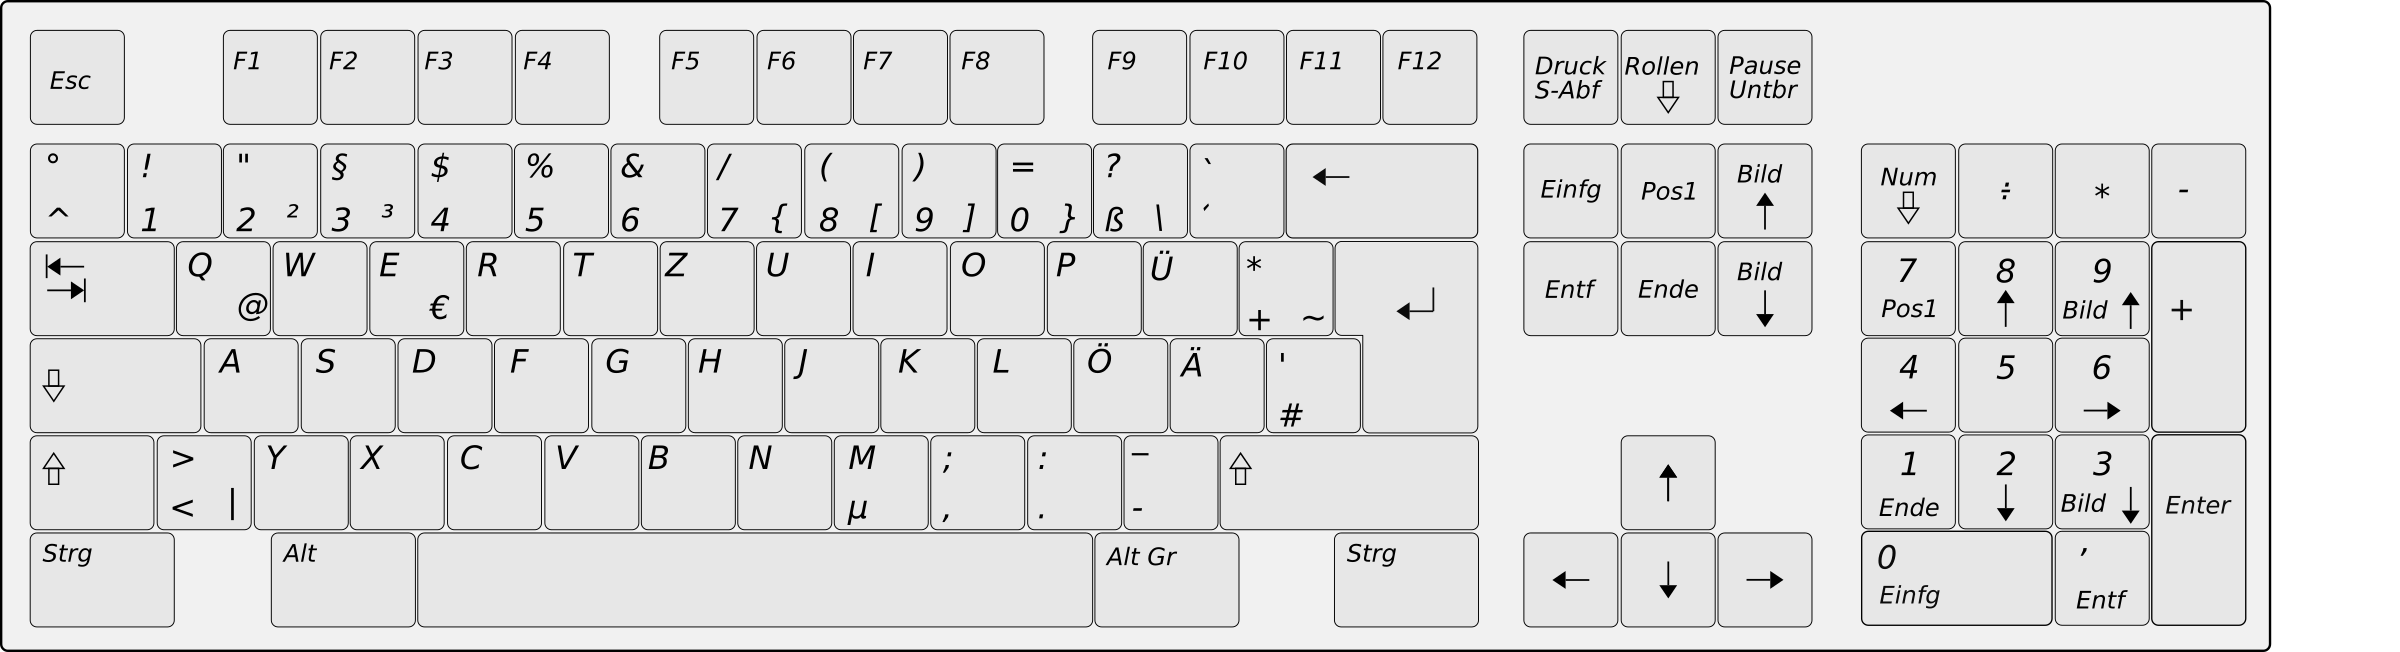 Keyboard clipart keyboard layout, Keyboard keyboard layout Transparent